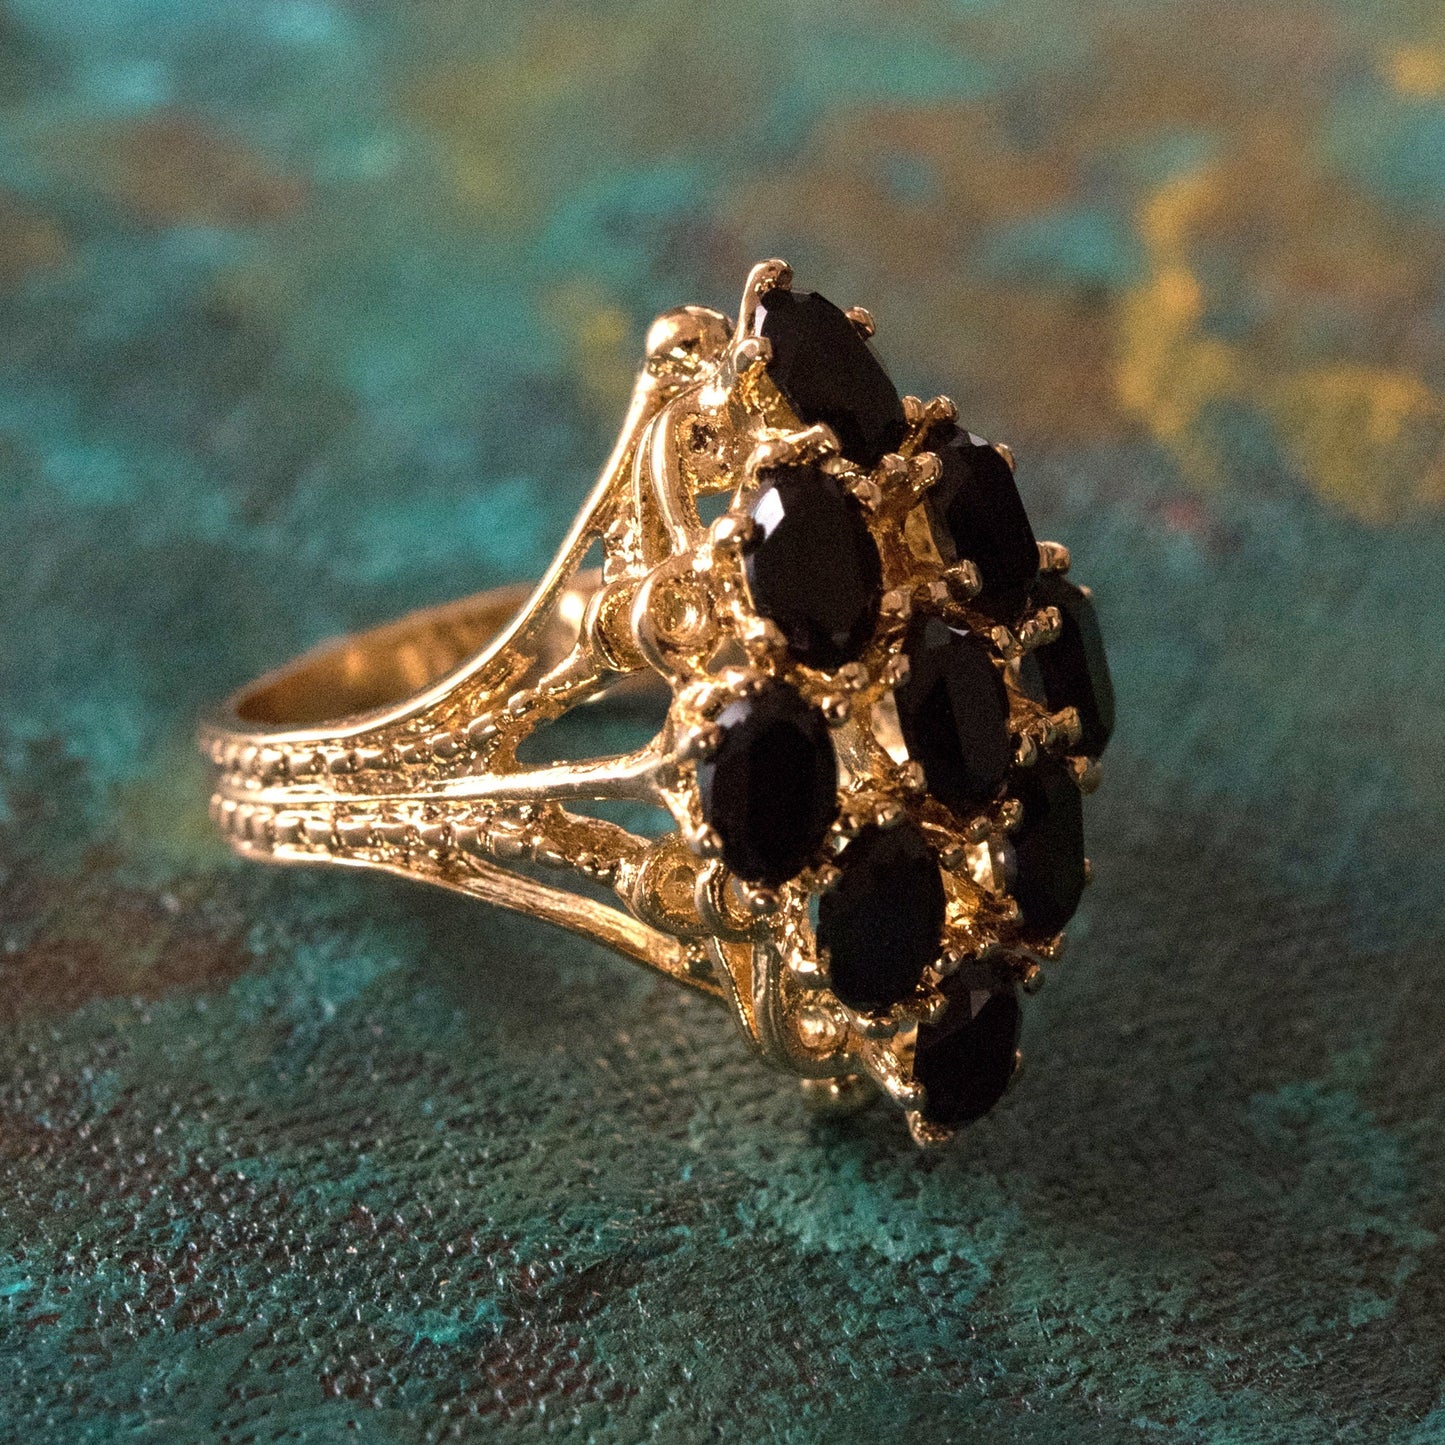 Vintage Ring Garnet Swarovski Crystal Cocktail Ring 18k Gold Antique Womans Handmade Garnets Rings R284 - Limited Stock - Never Worn